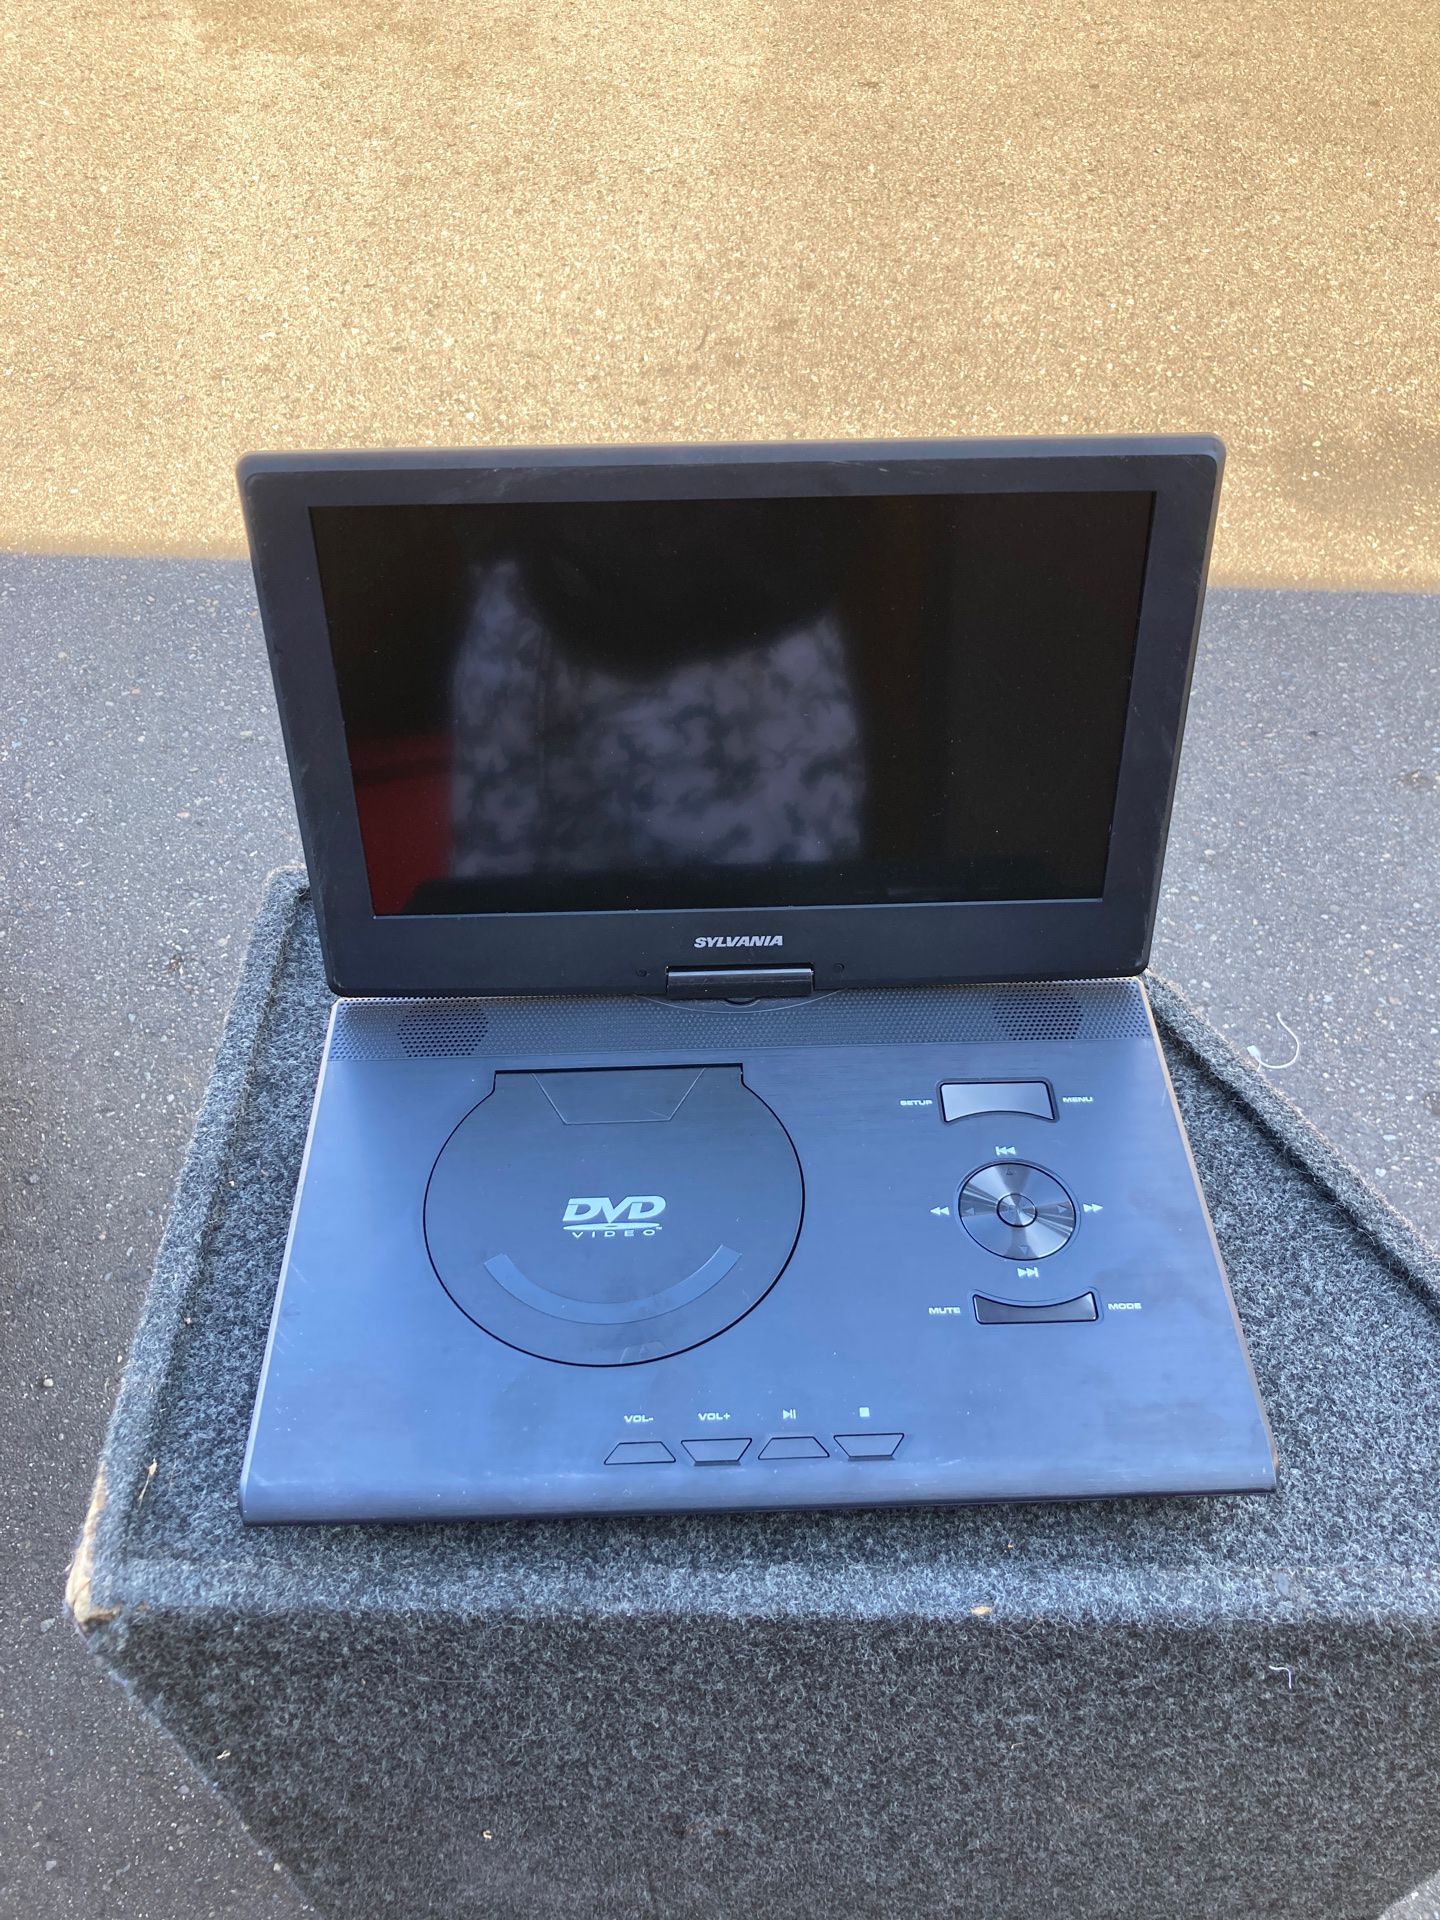 Sylvia is 13.5 2019 portable DVD player